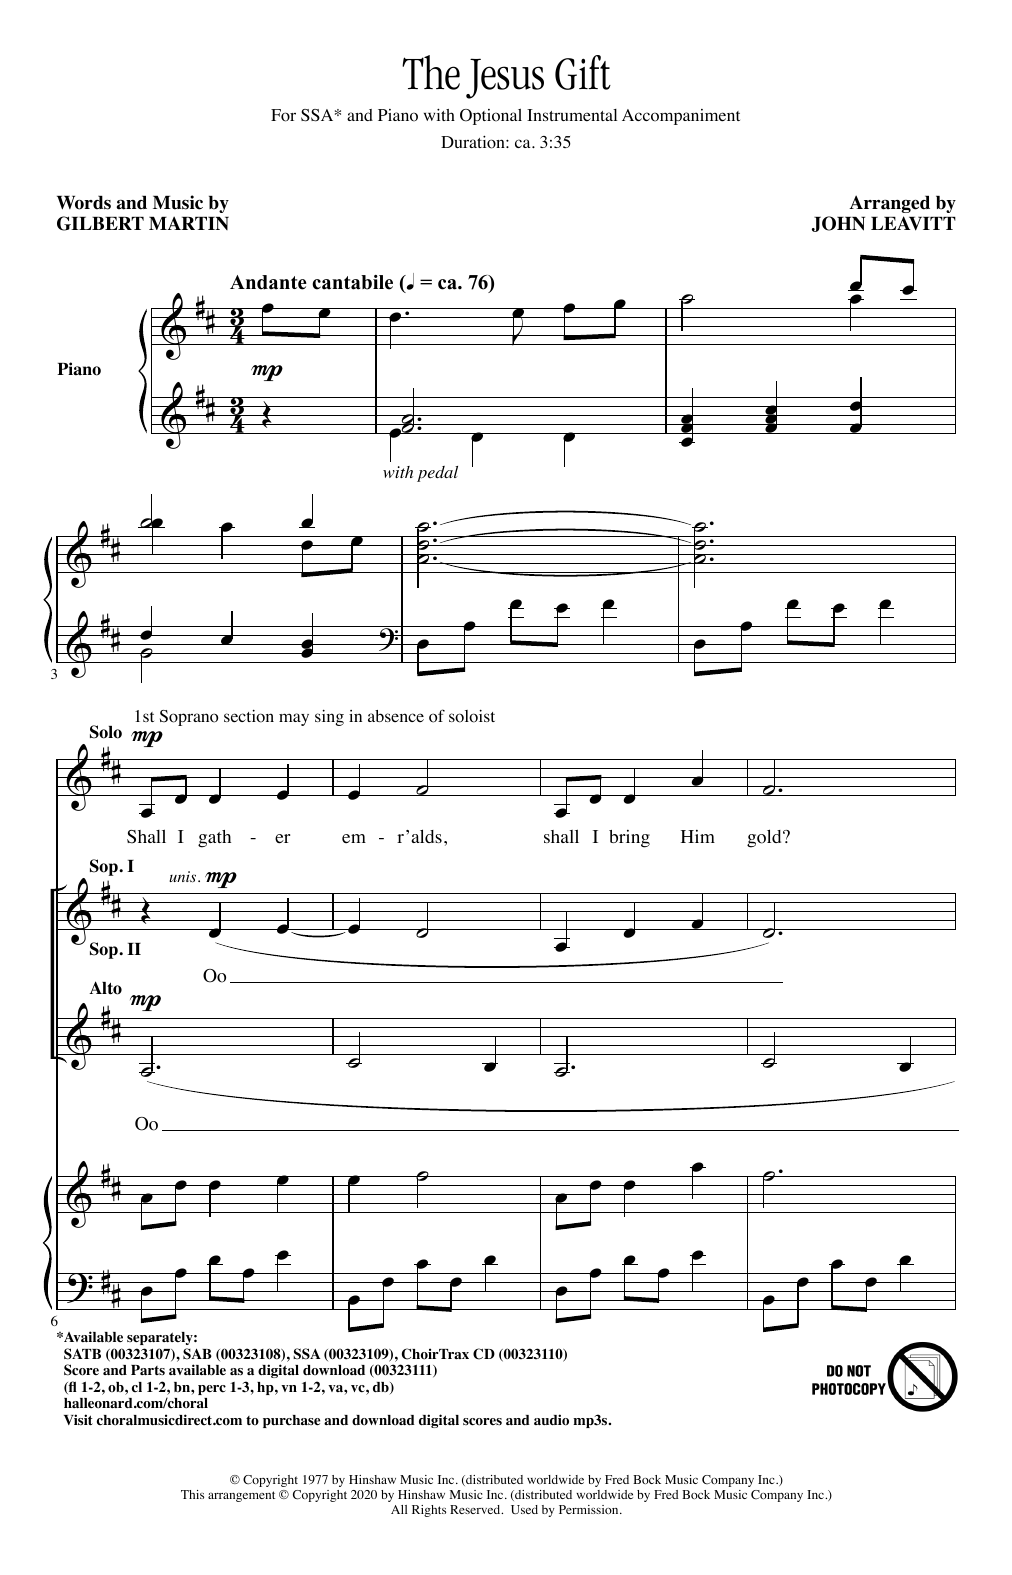 Gilbert Martin The Jesus Gift (arr. John Leavitt) Sheet Music Notes & Chords for SATB Choir - Download or Print PDF